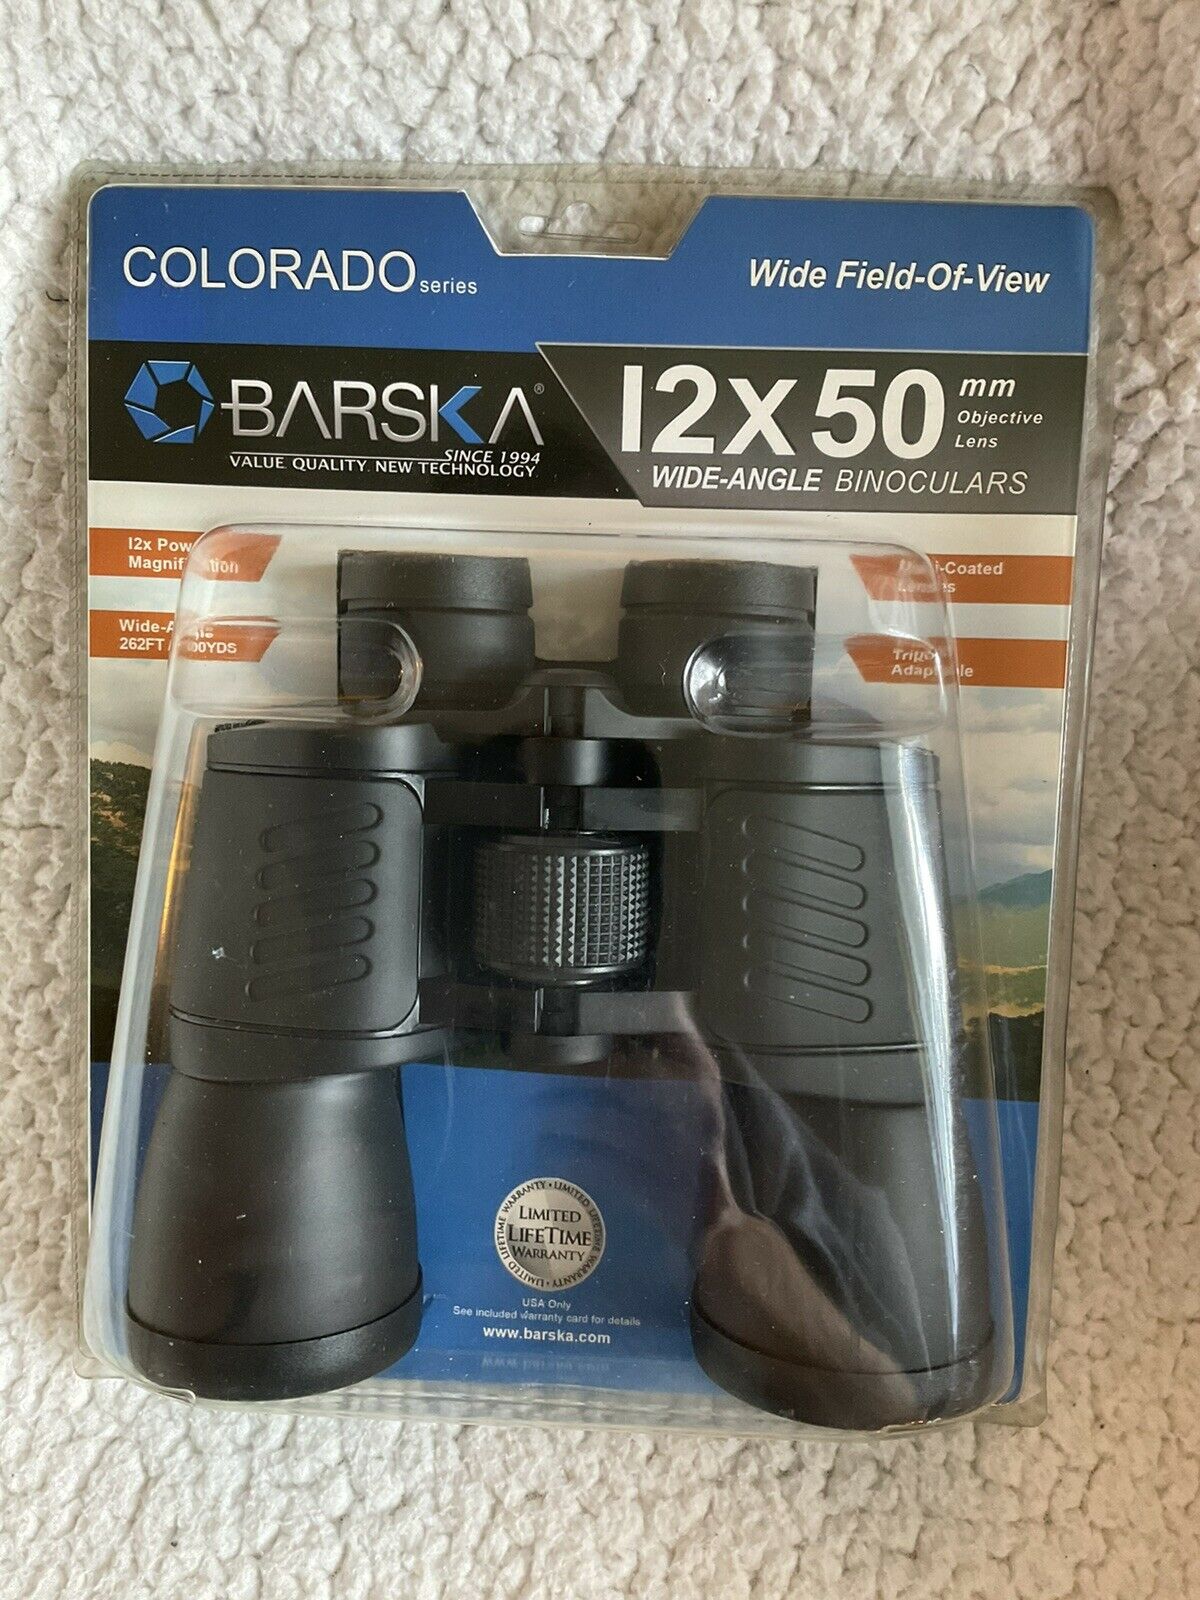 BARSKA Binoculars Wide-Angle 12 x 50 mm Colorado Series carrying case BRAND NEW